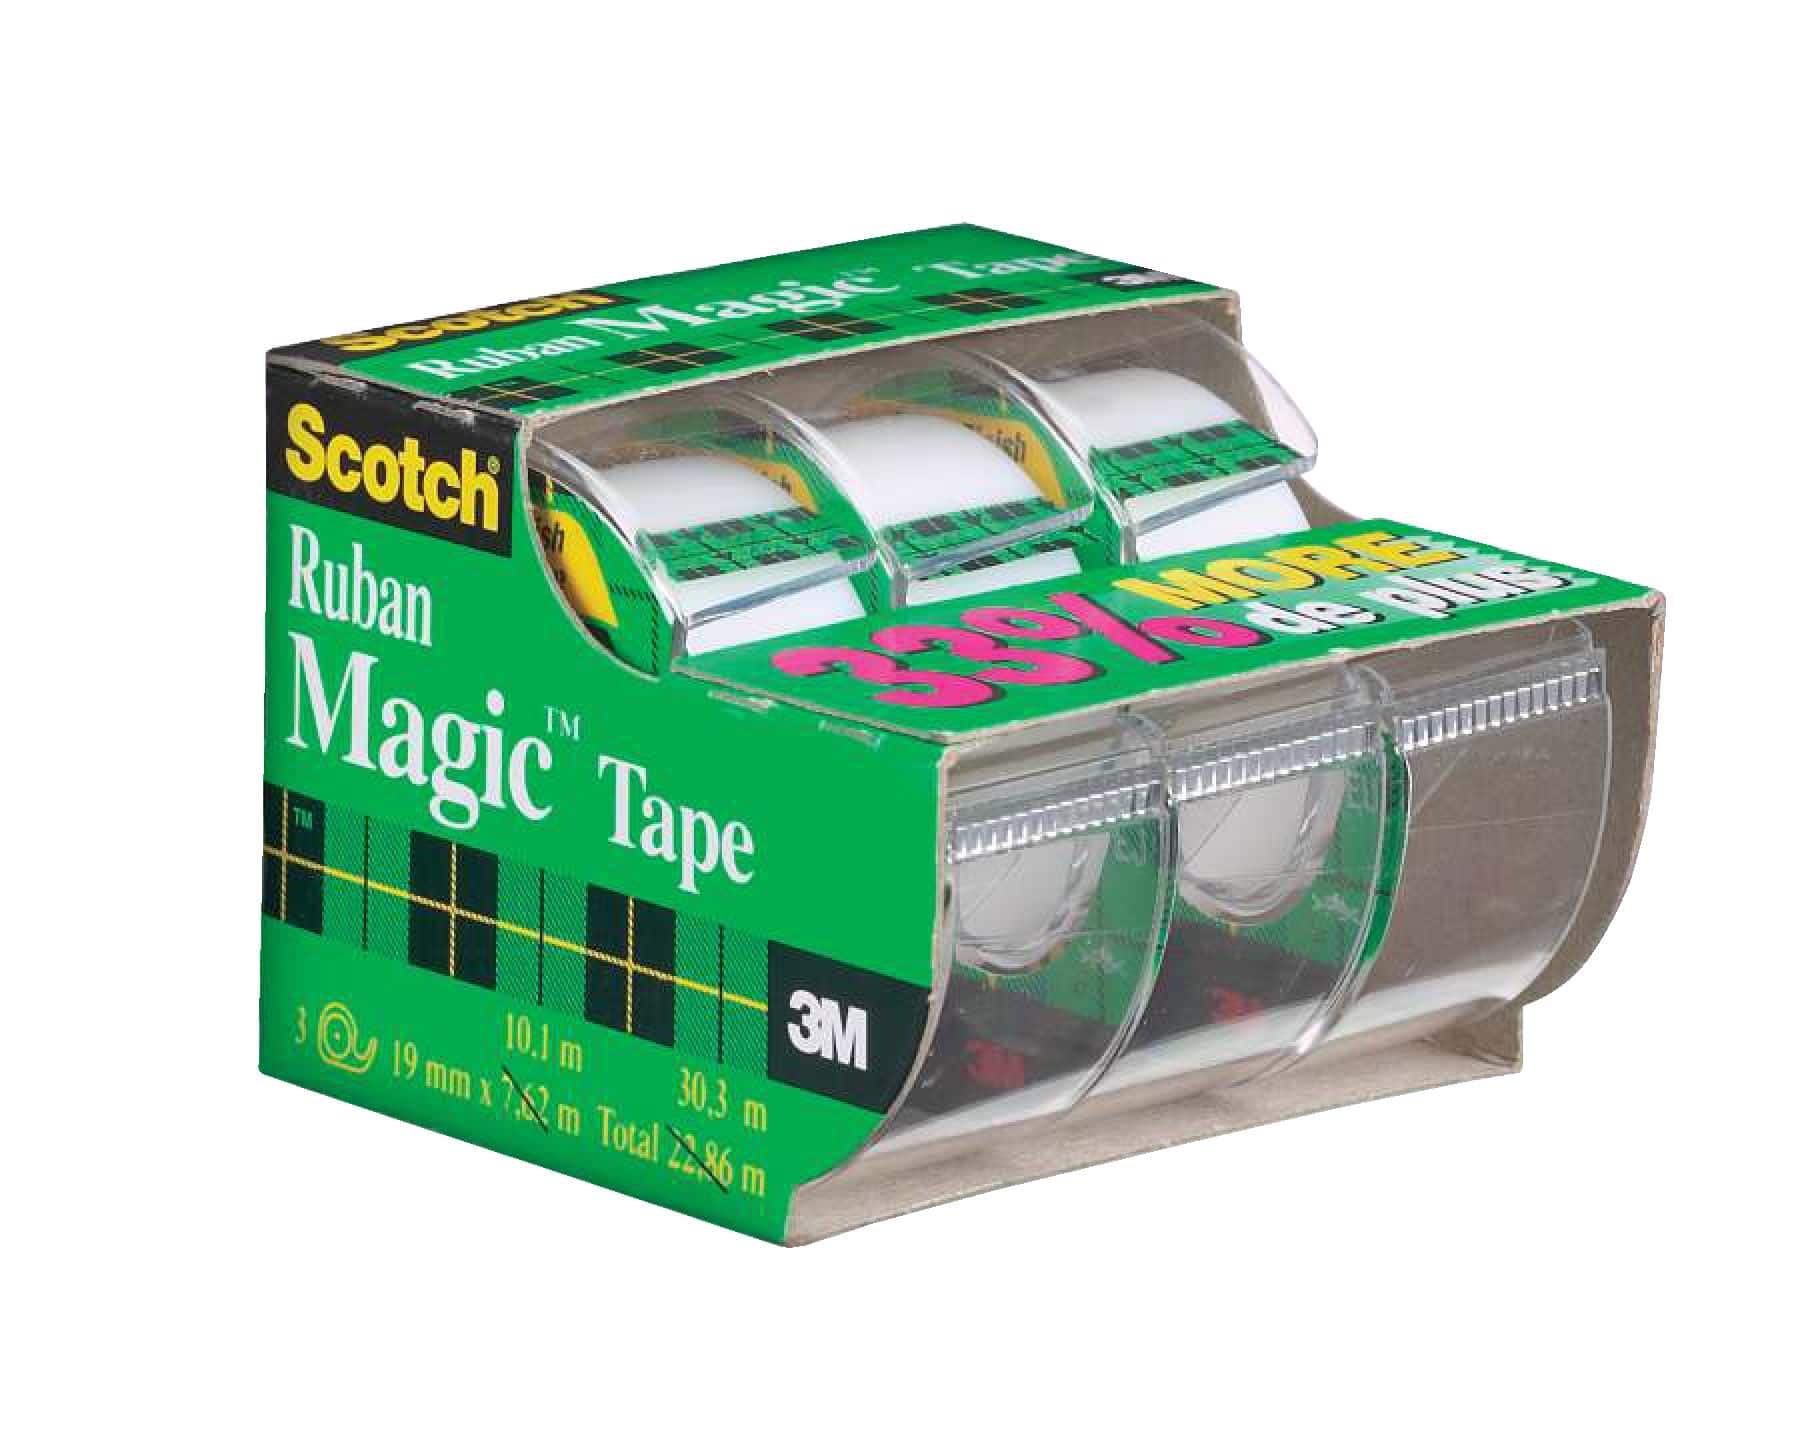 3M Scotch Magic Tape In Dispenser For Home/Office, Invisible Matte